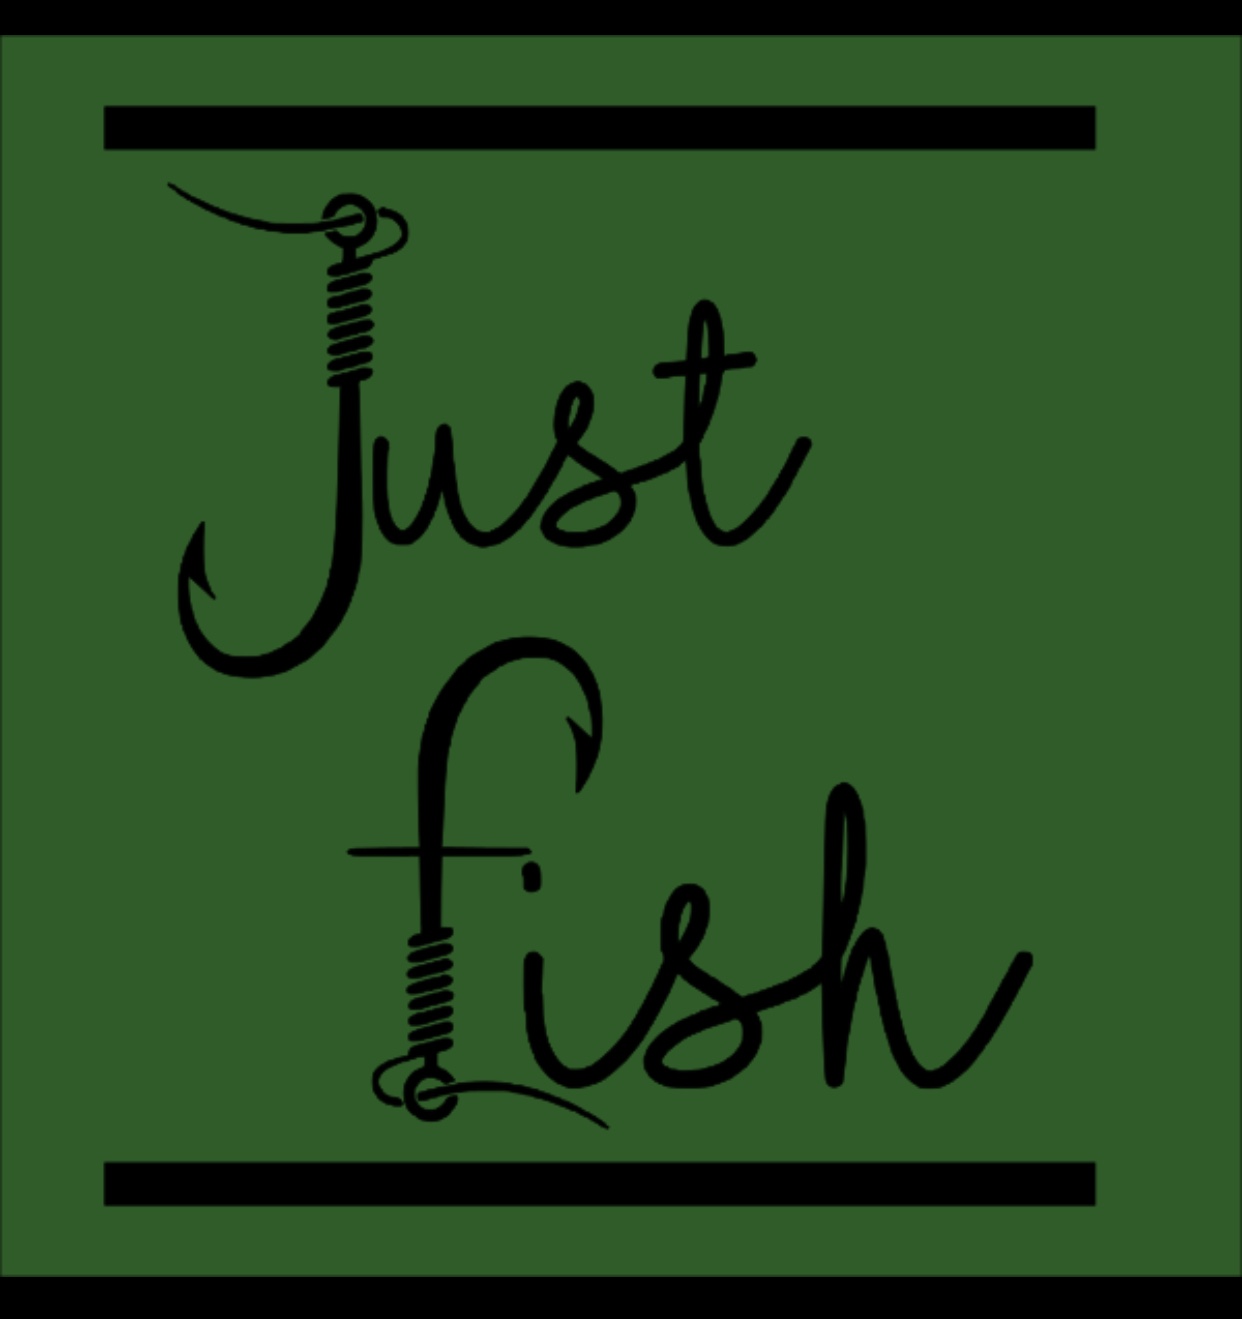 Just Fish 12x12